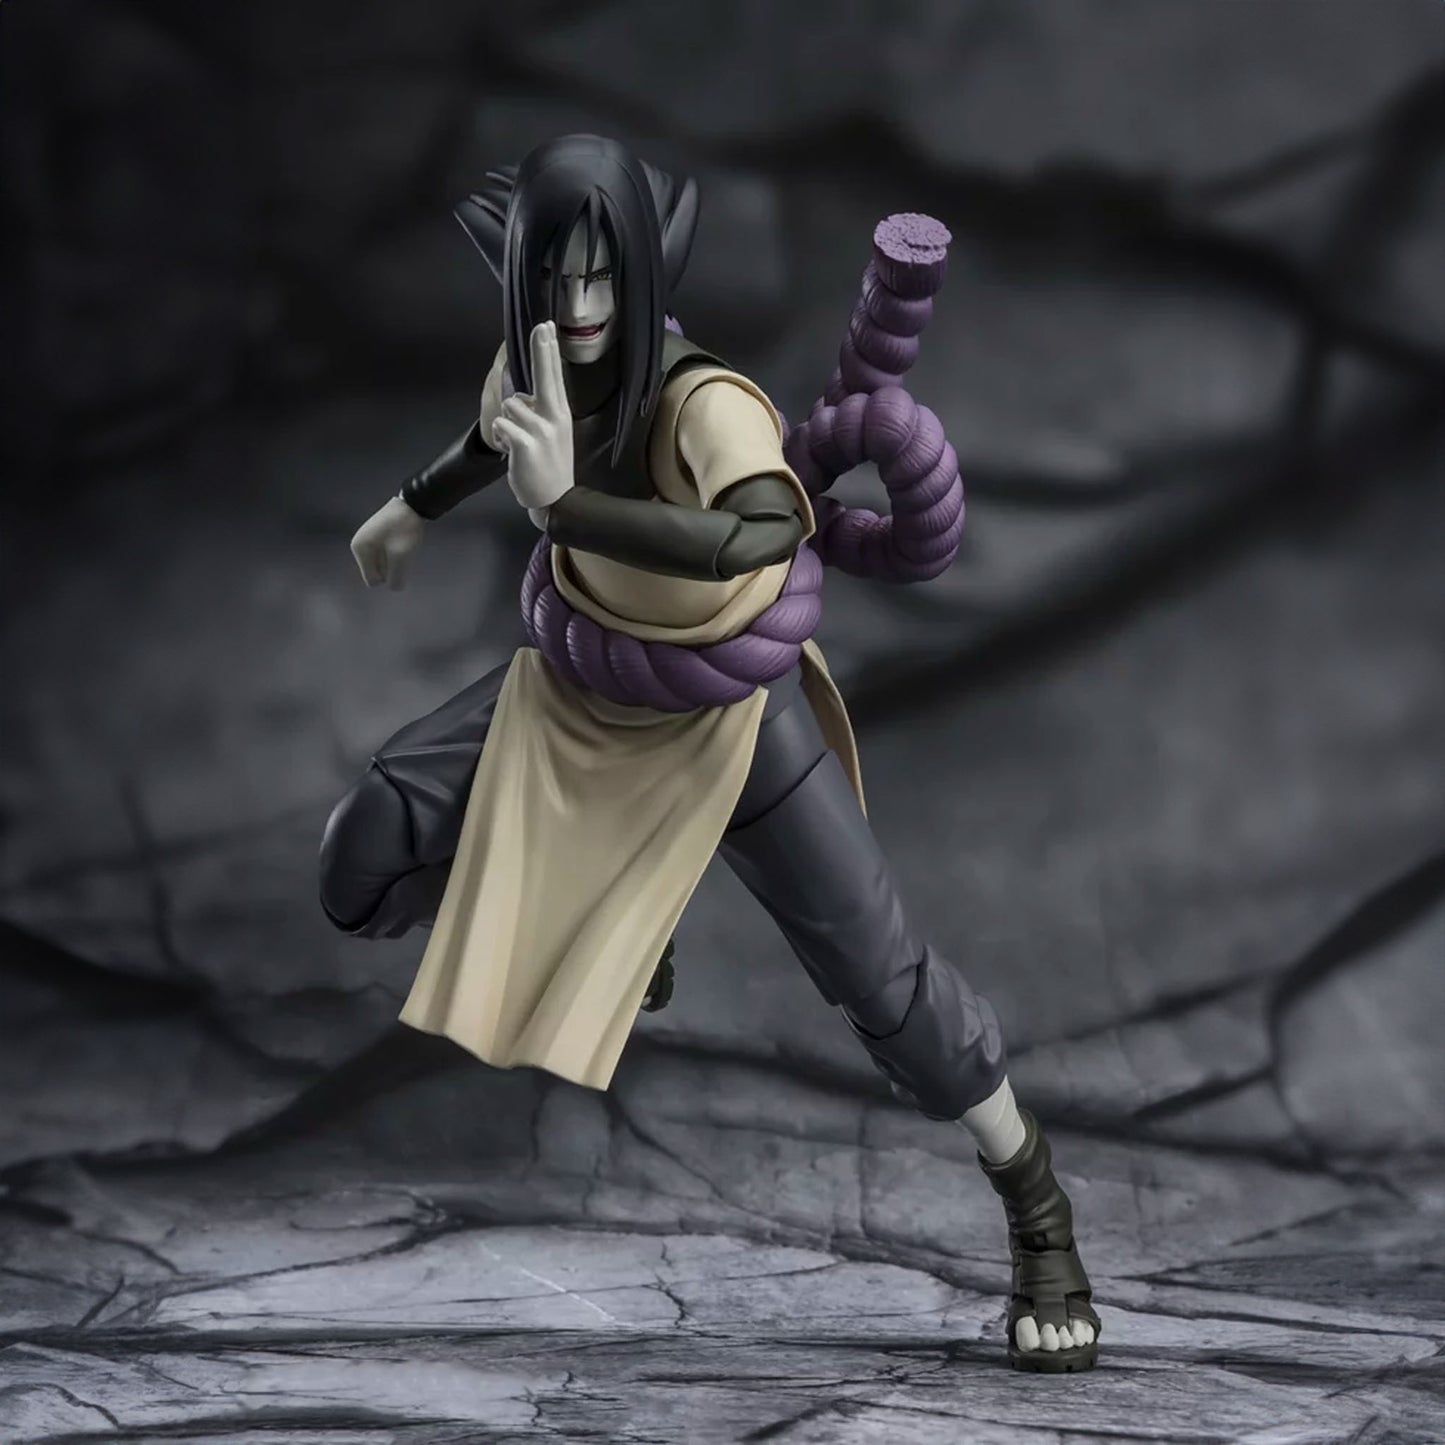 Orochimaru (Naruto Shippuden) "Seeker of Imortality" S.H.Figuarts Figure